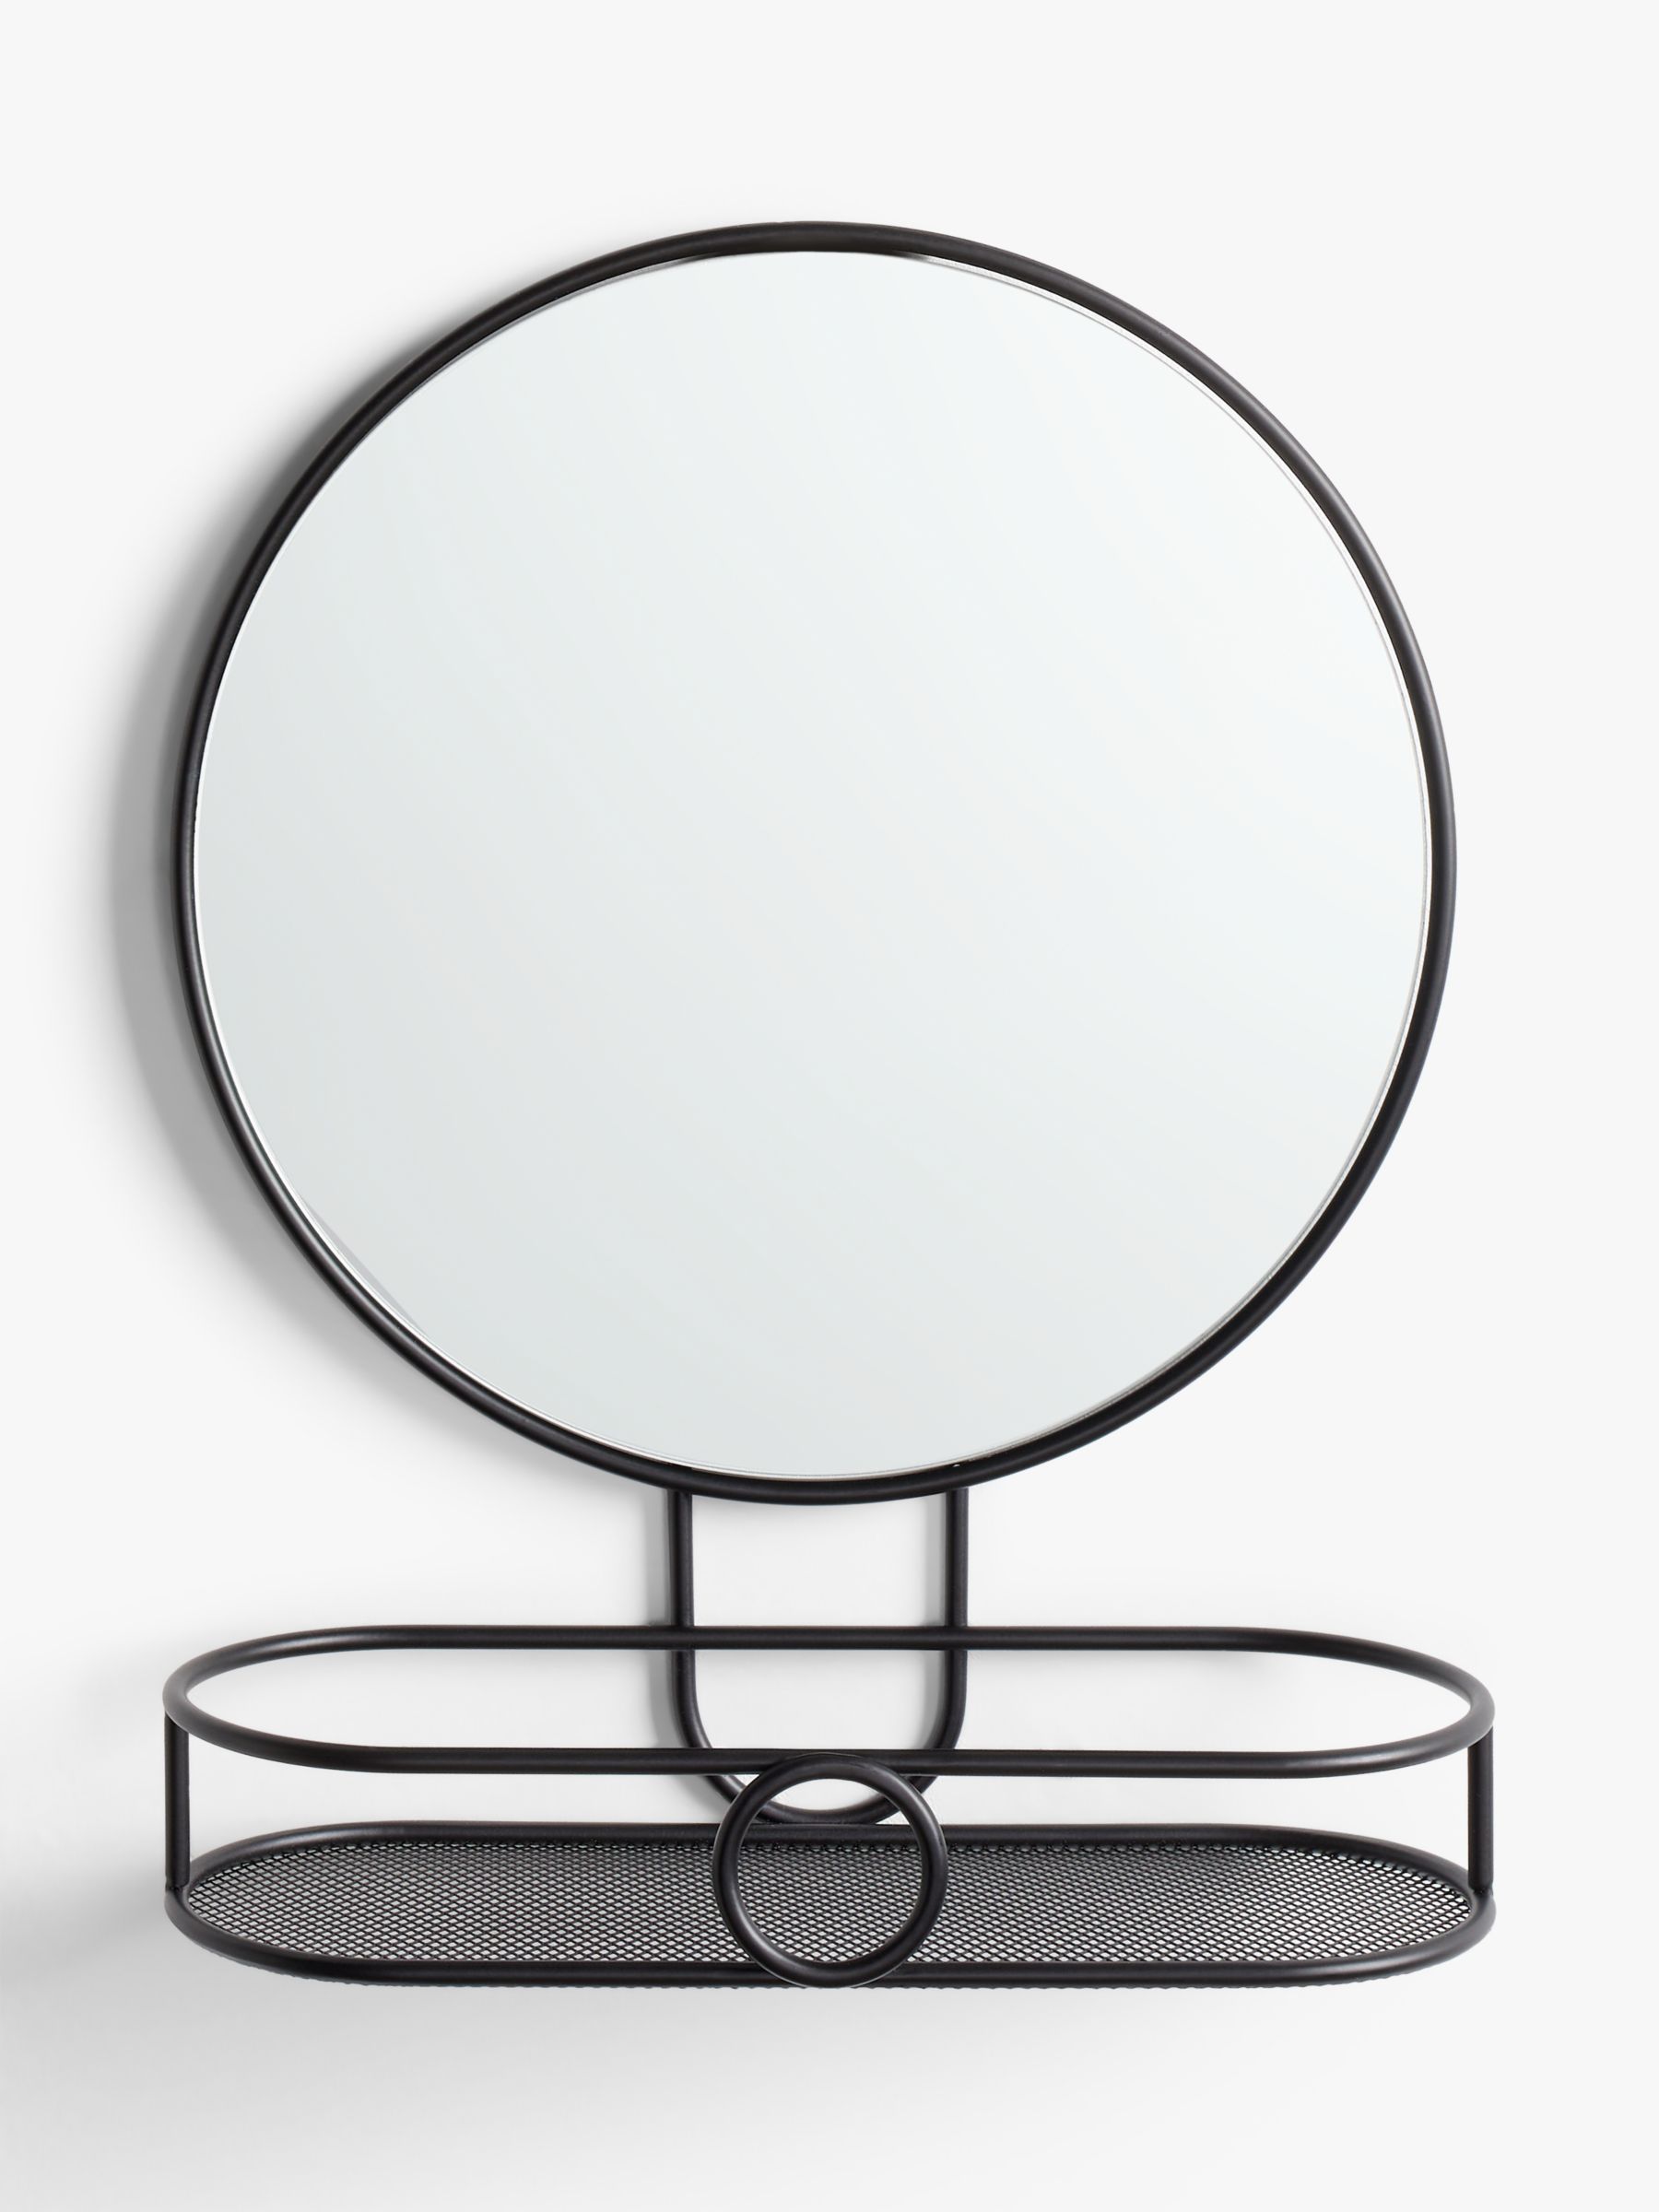 Anyday John Lewis Partners Round, White Bathroom Mirrors With Shelf